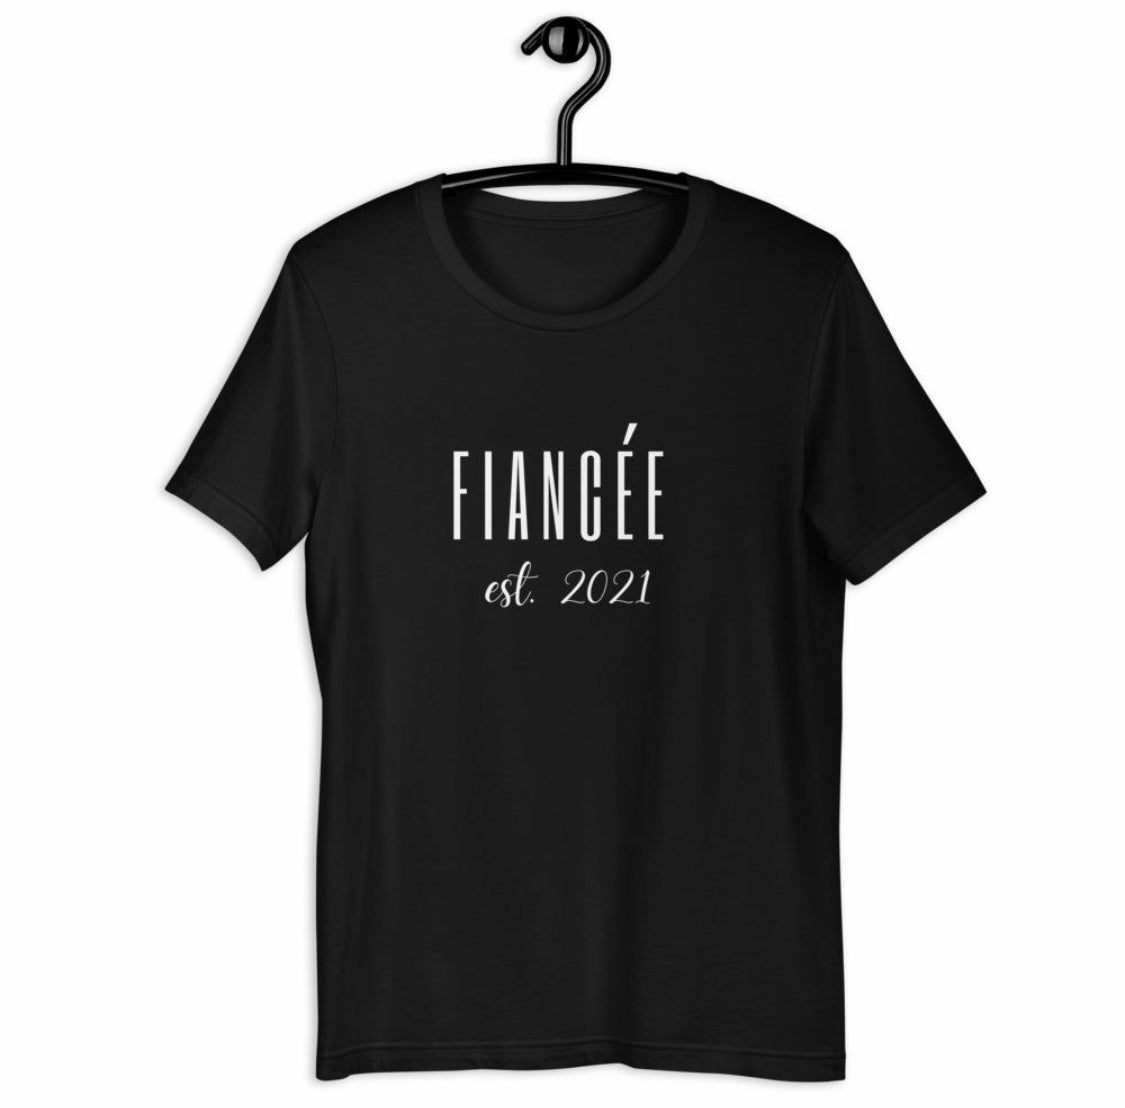 "Fiancée est." Short-Sleeve T-Shirt